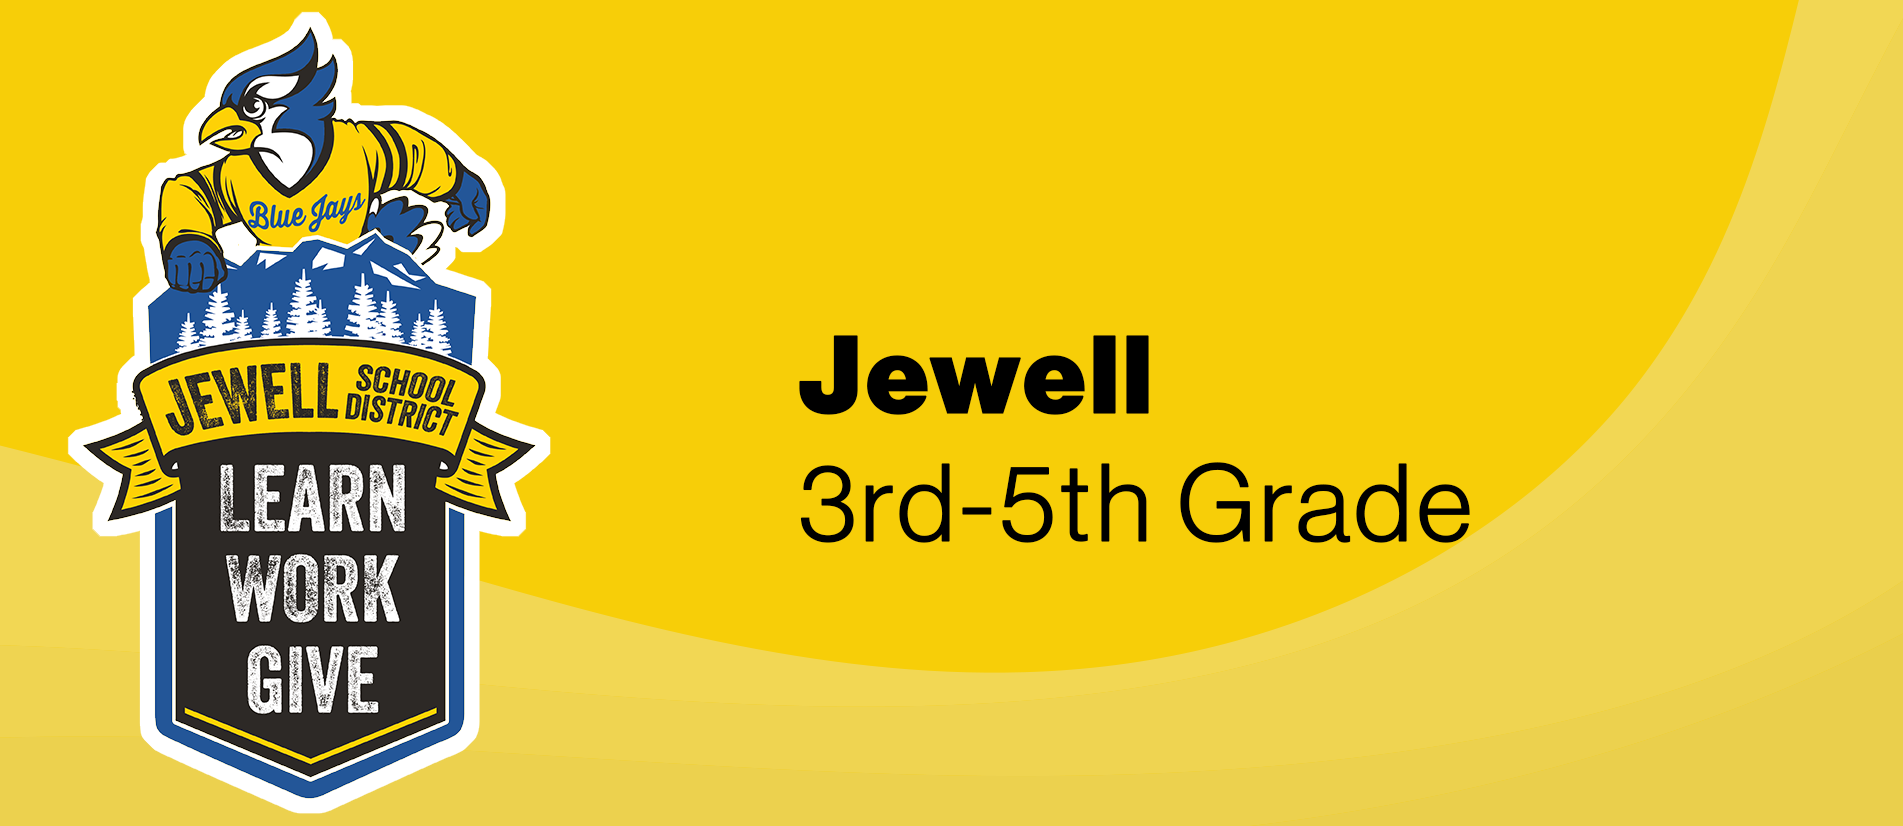 Jewell 3rd-5th grade